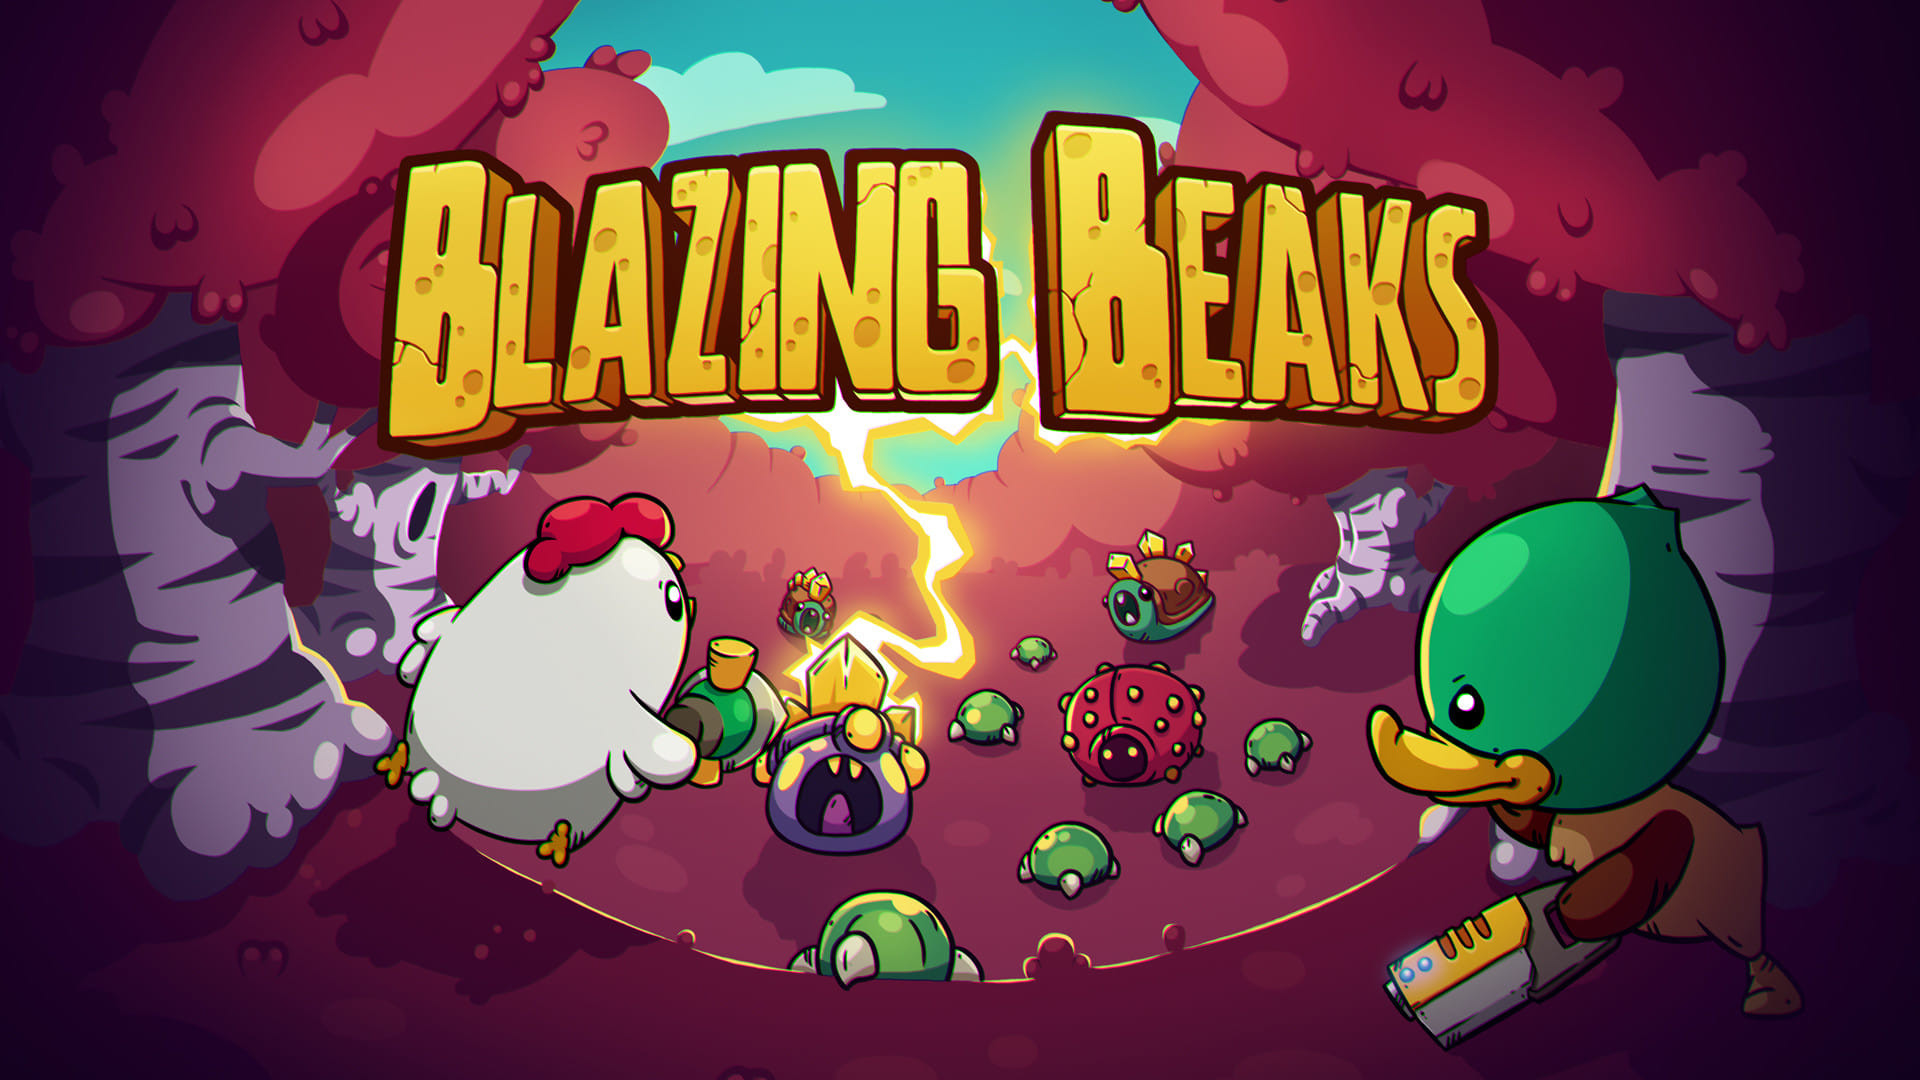 Blazing Beaks download the last version for mac